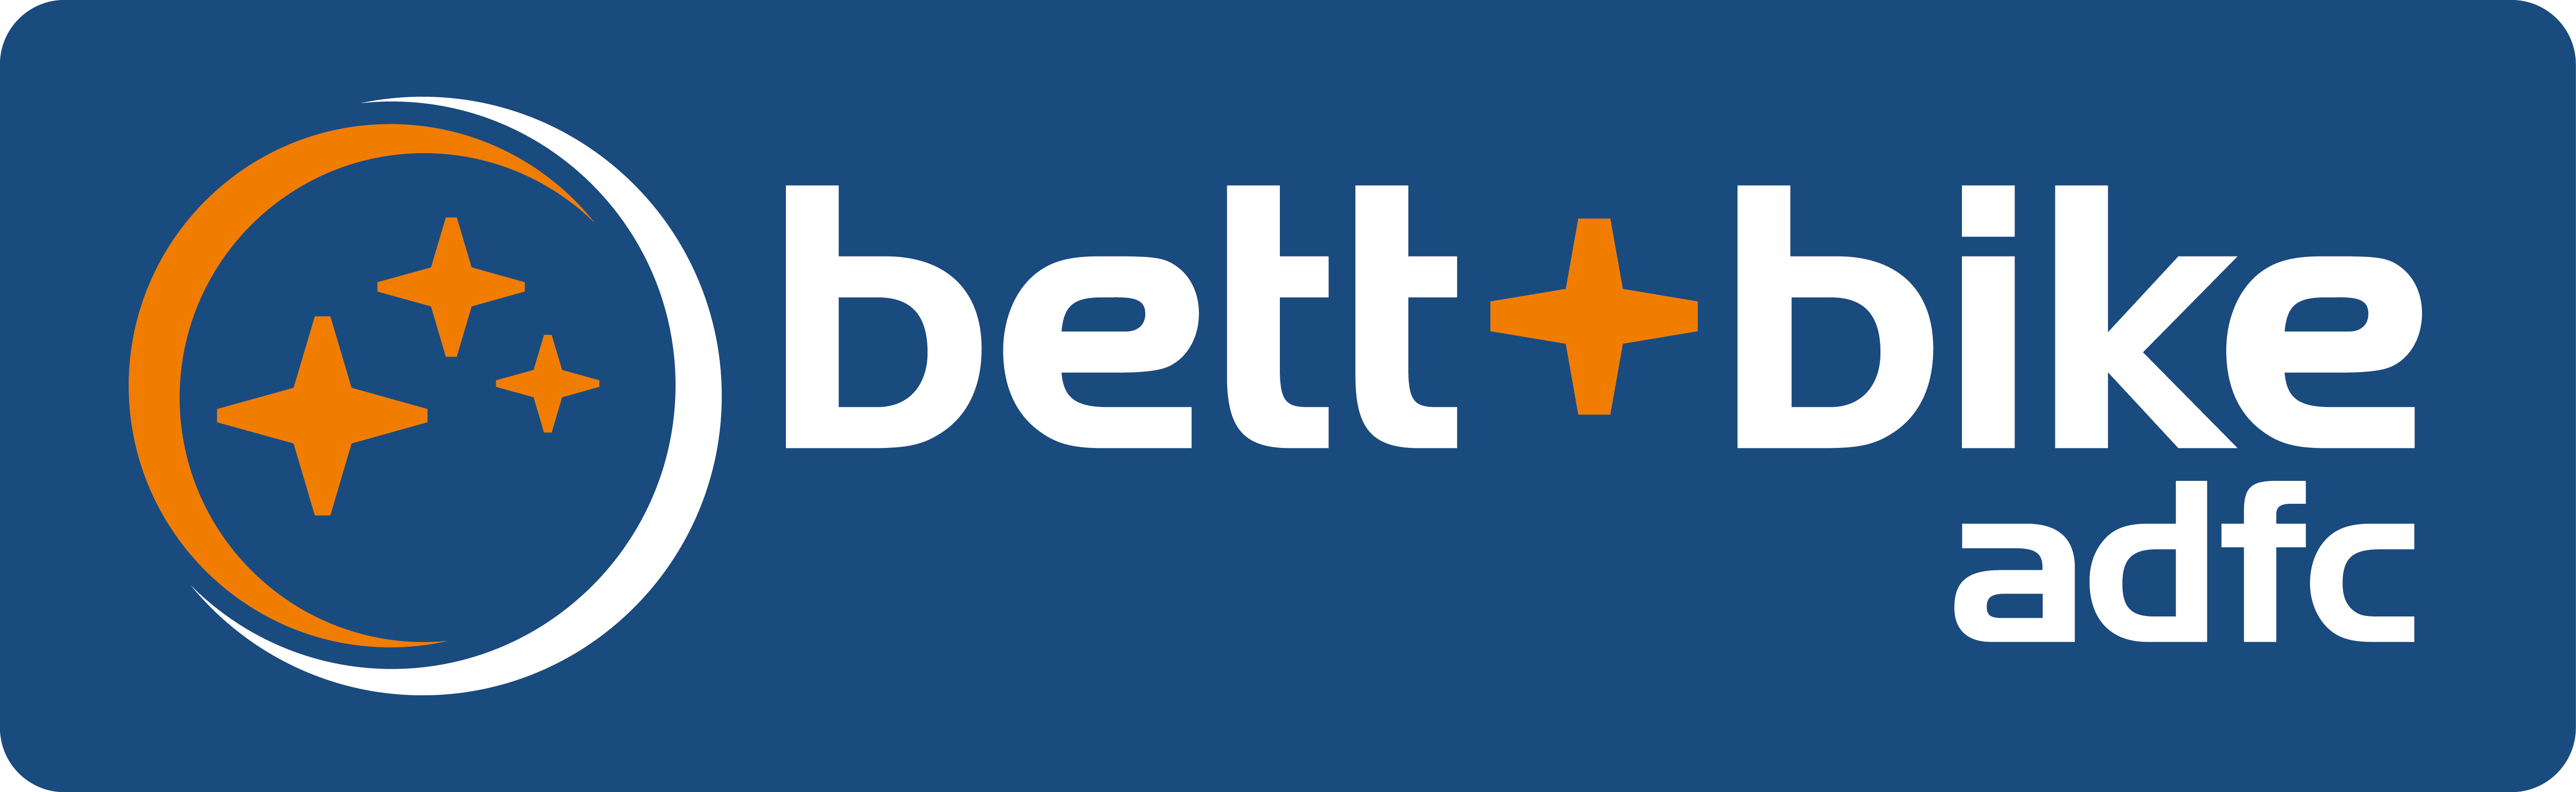 BettBike Logo farbig 4c